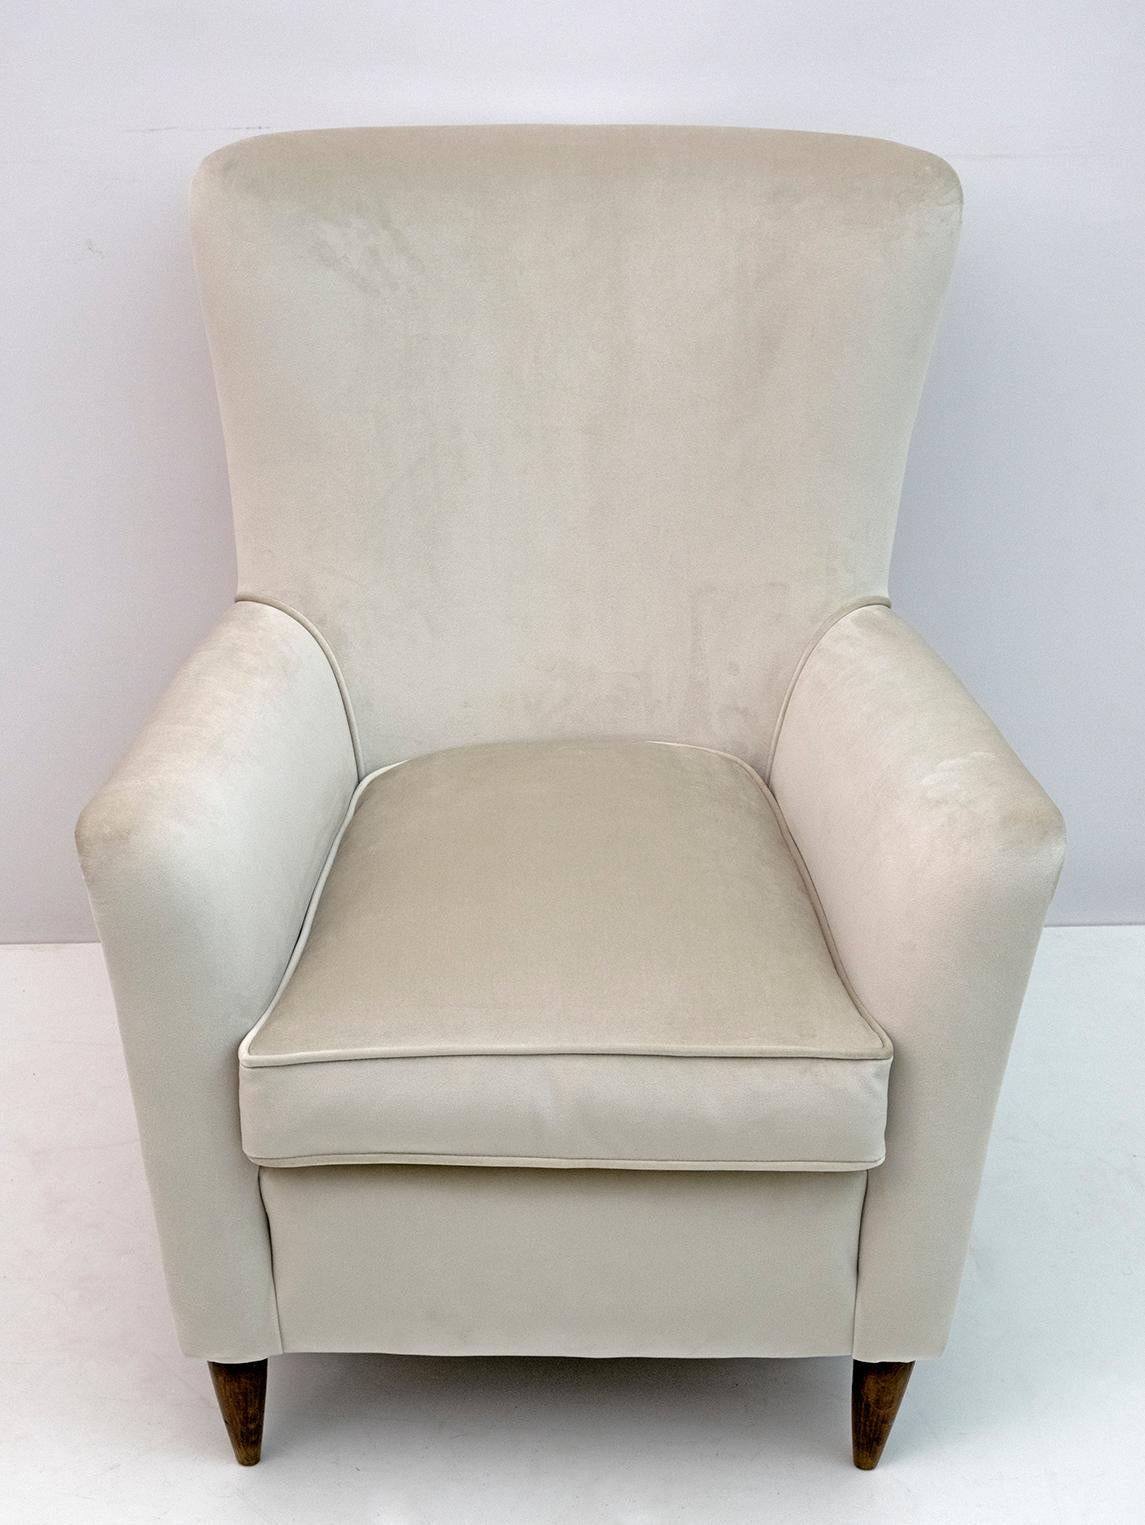 Pair of Gio Ponti Style Mid-Century Modern Italian Velvet Armchairs for Isa, 50s For Sale 9